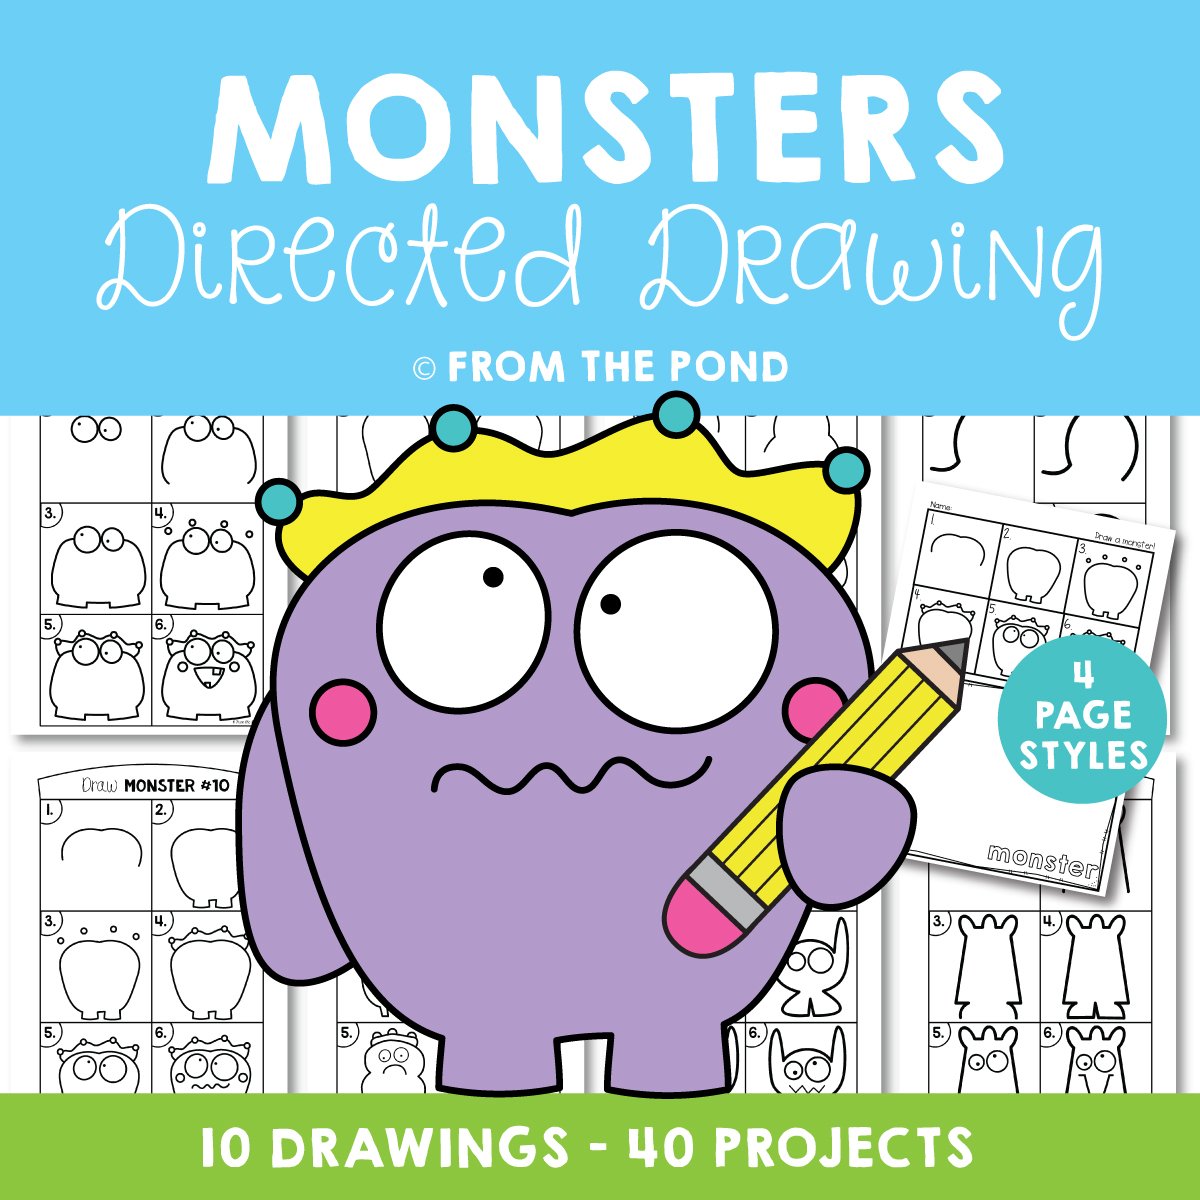 Monster Drawings